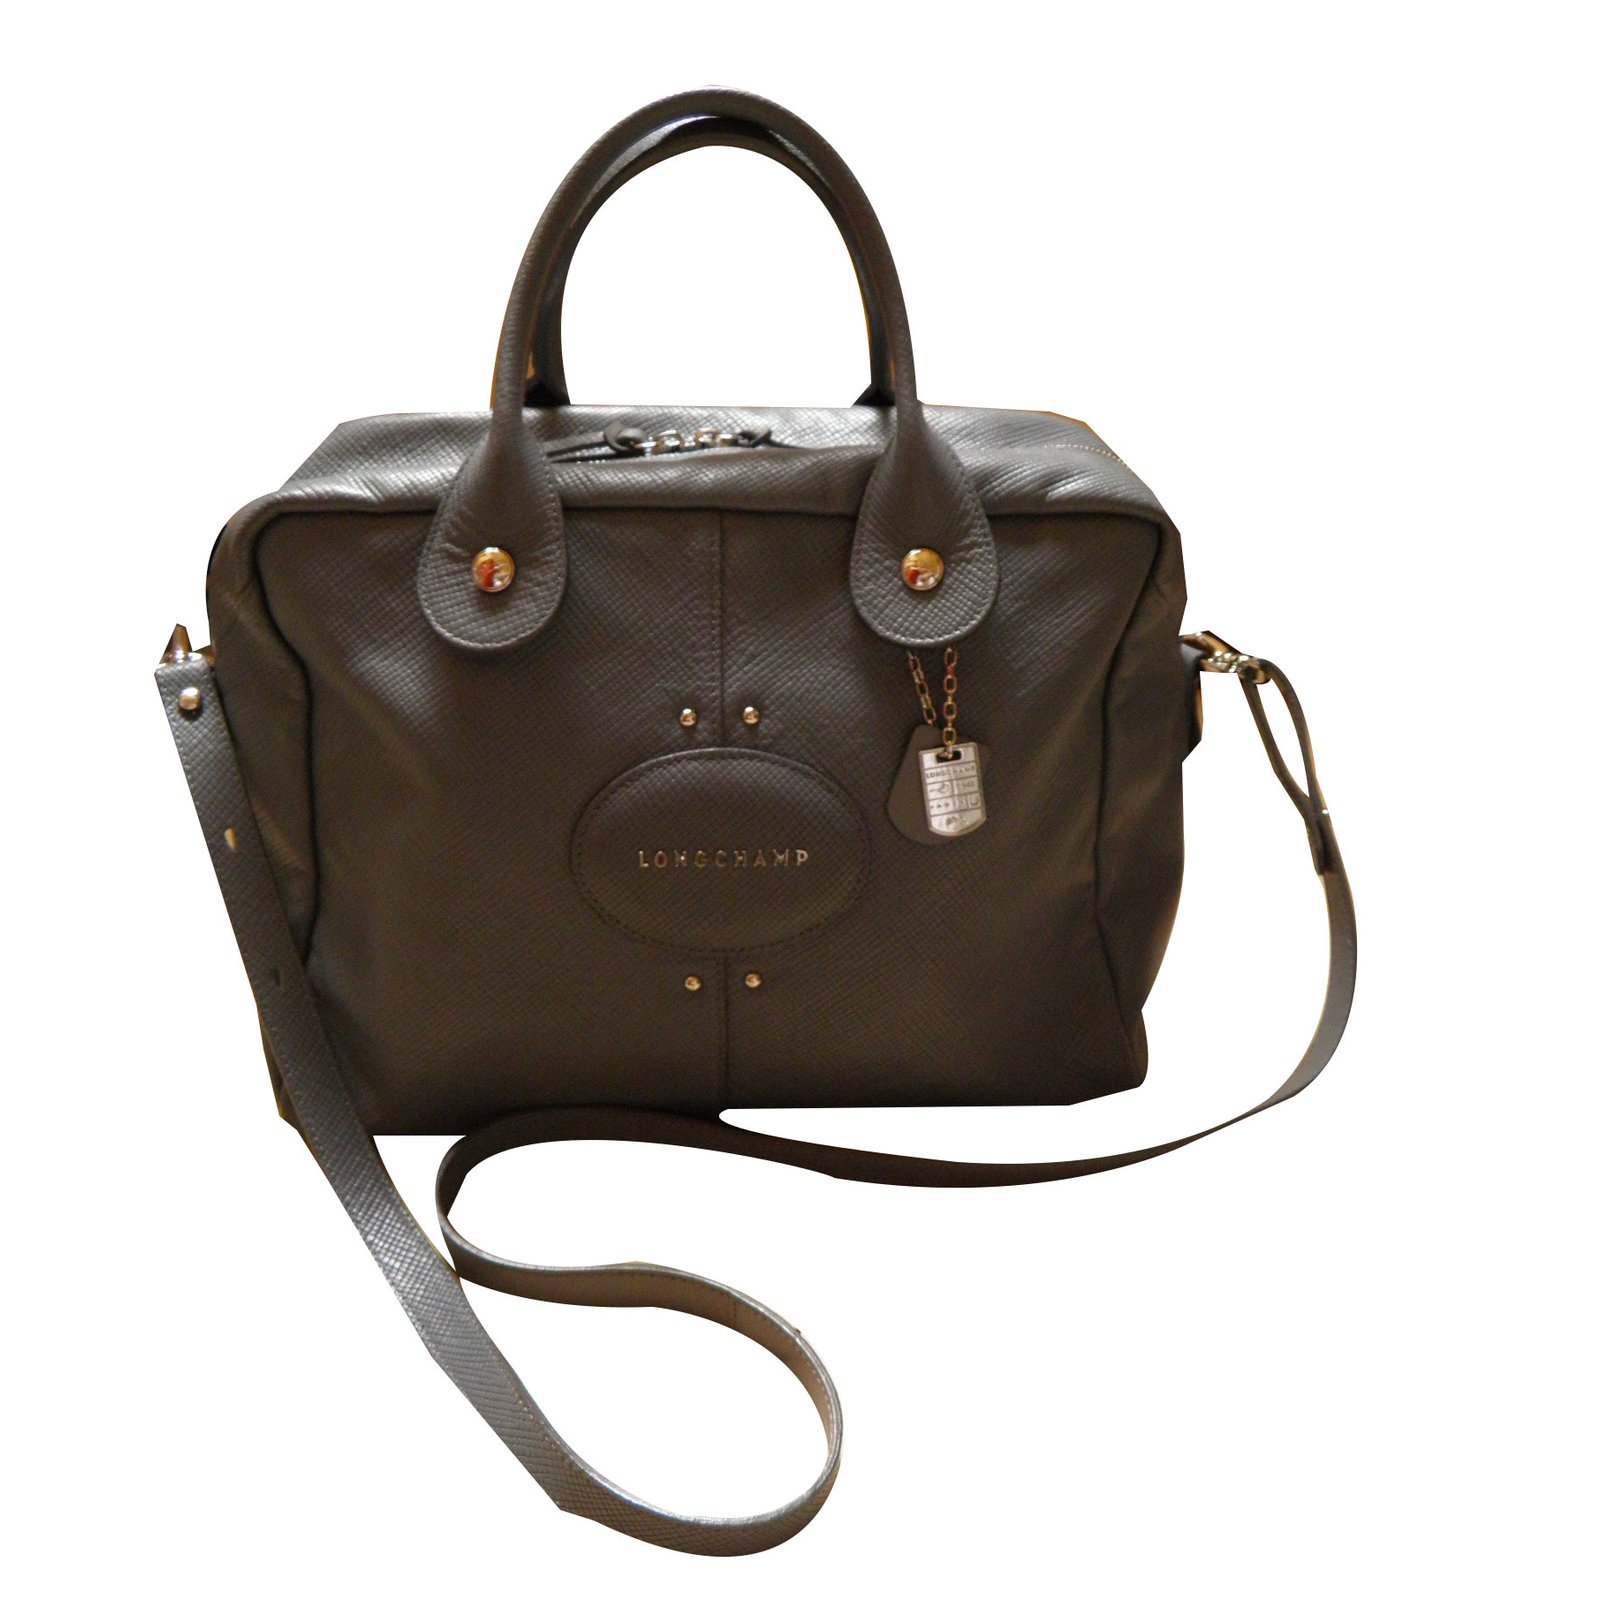 longchamp quadri leather hobo bag